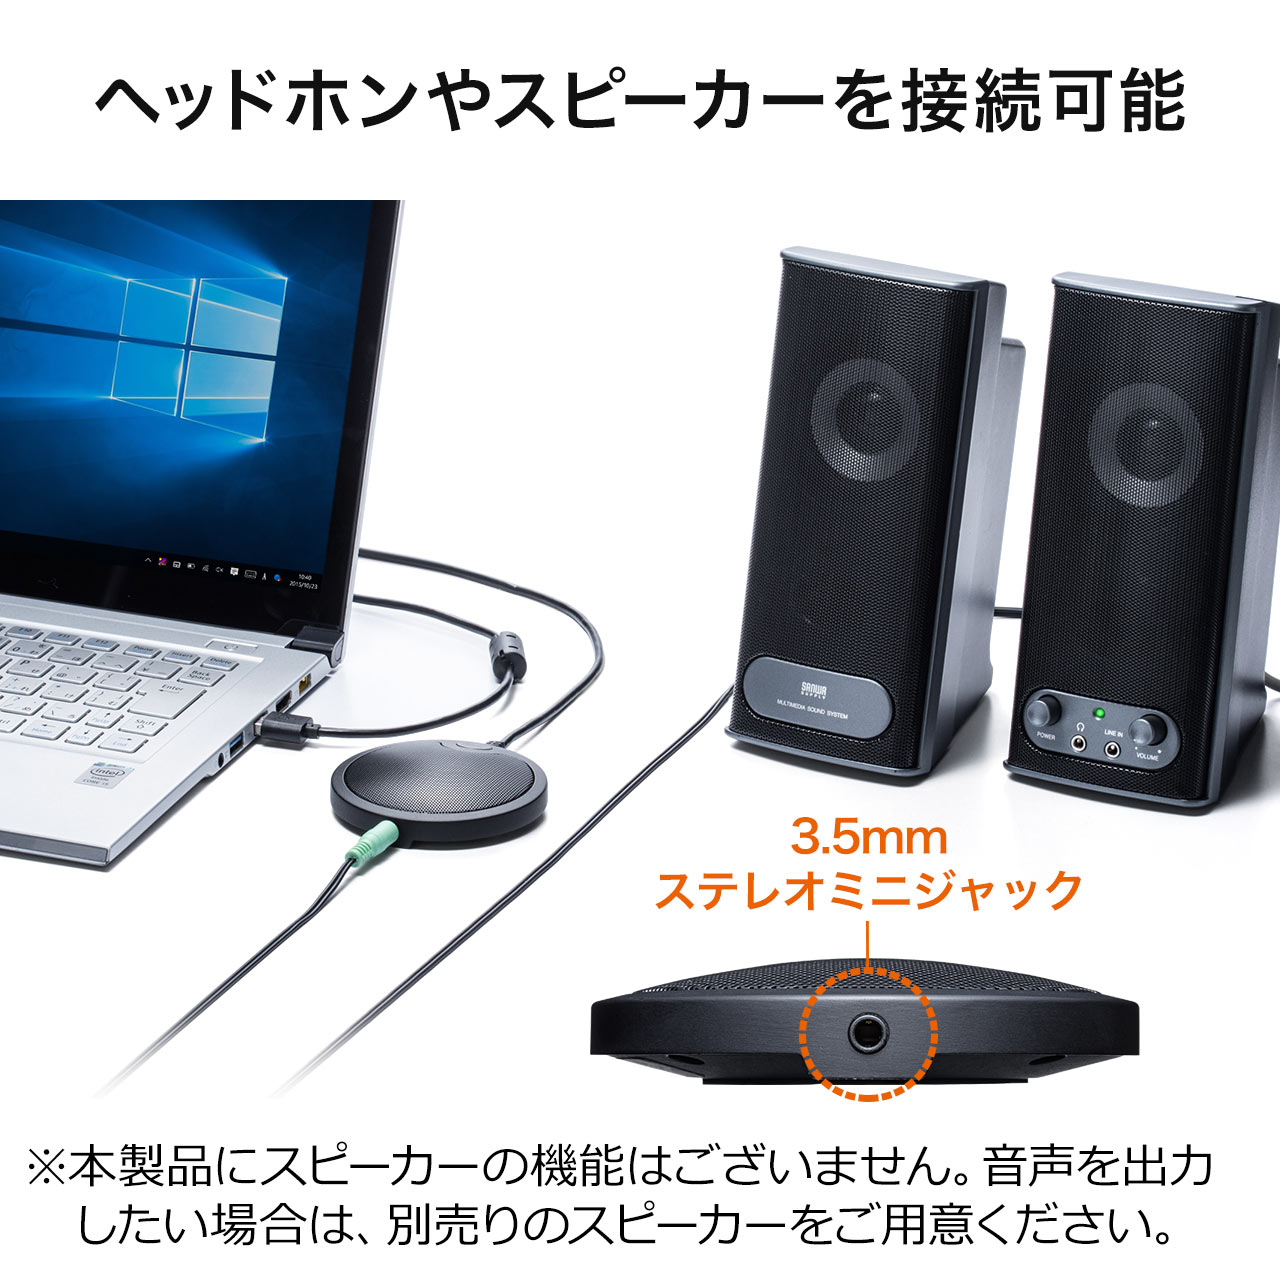 WEBc}CN USBڑ w Sw W͈ a5m USB}CN zoom Skype Windows Mac 400-MC011